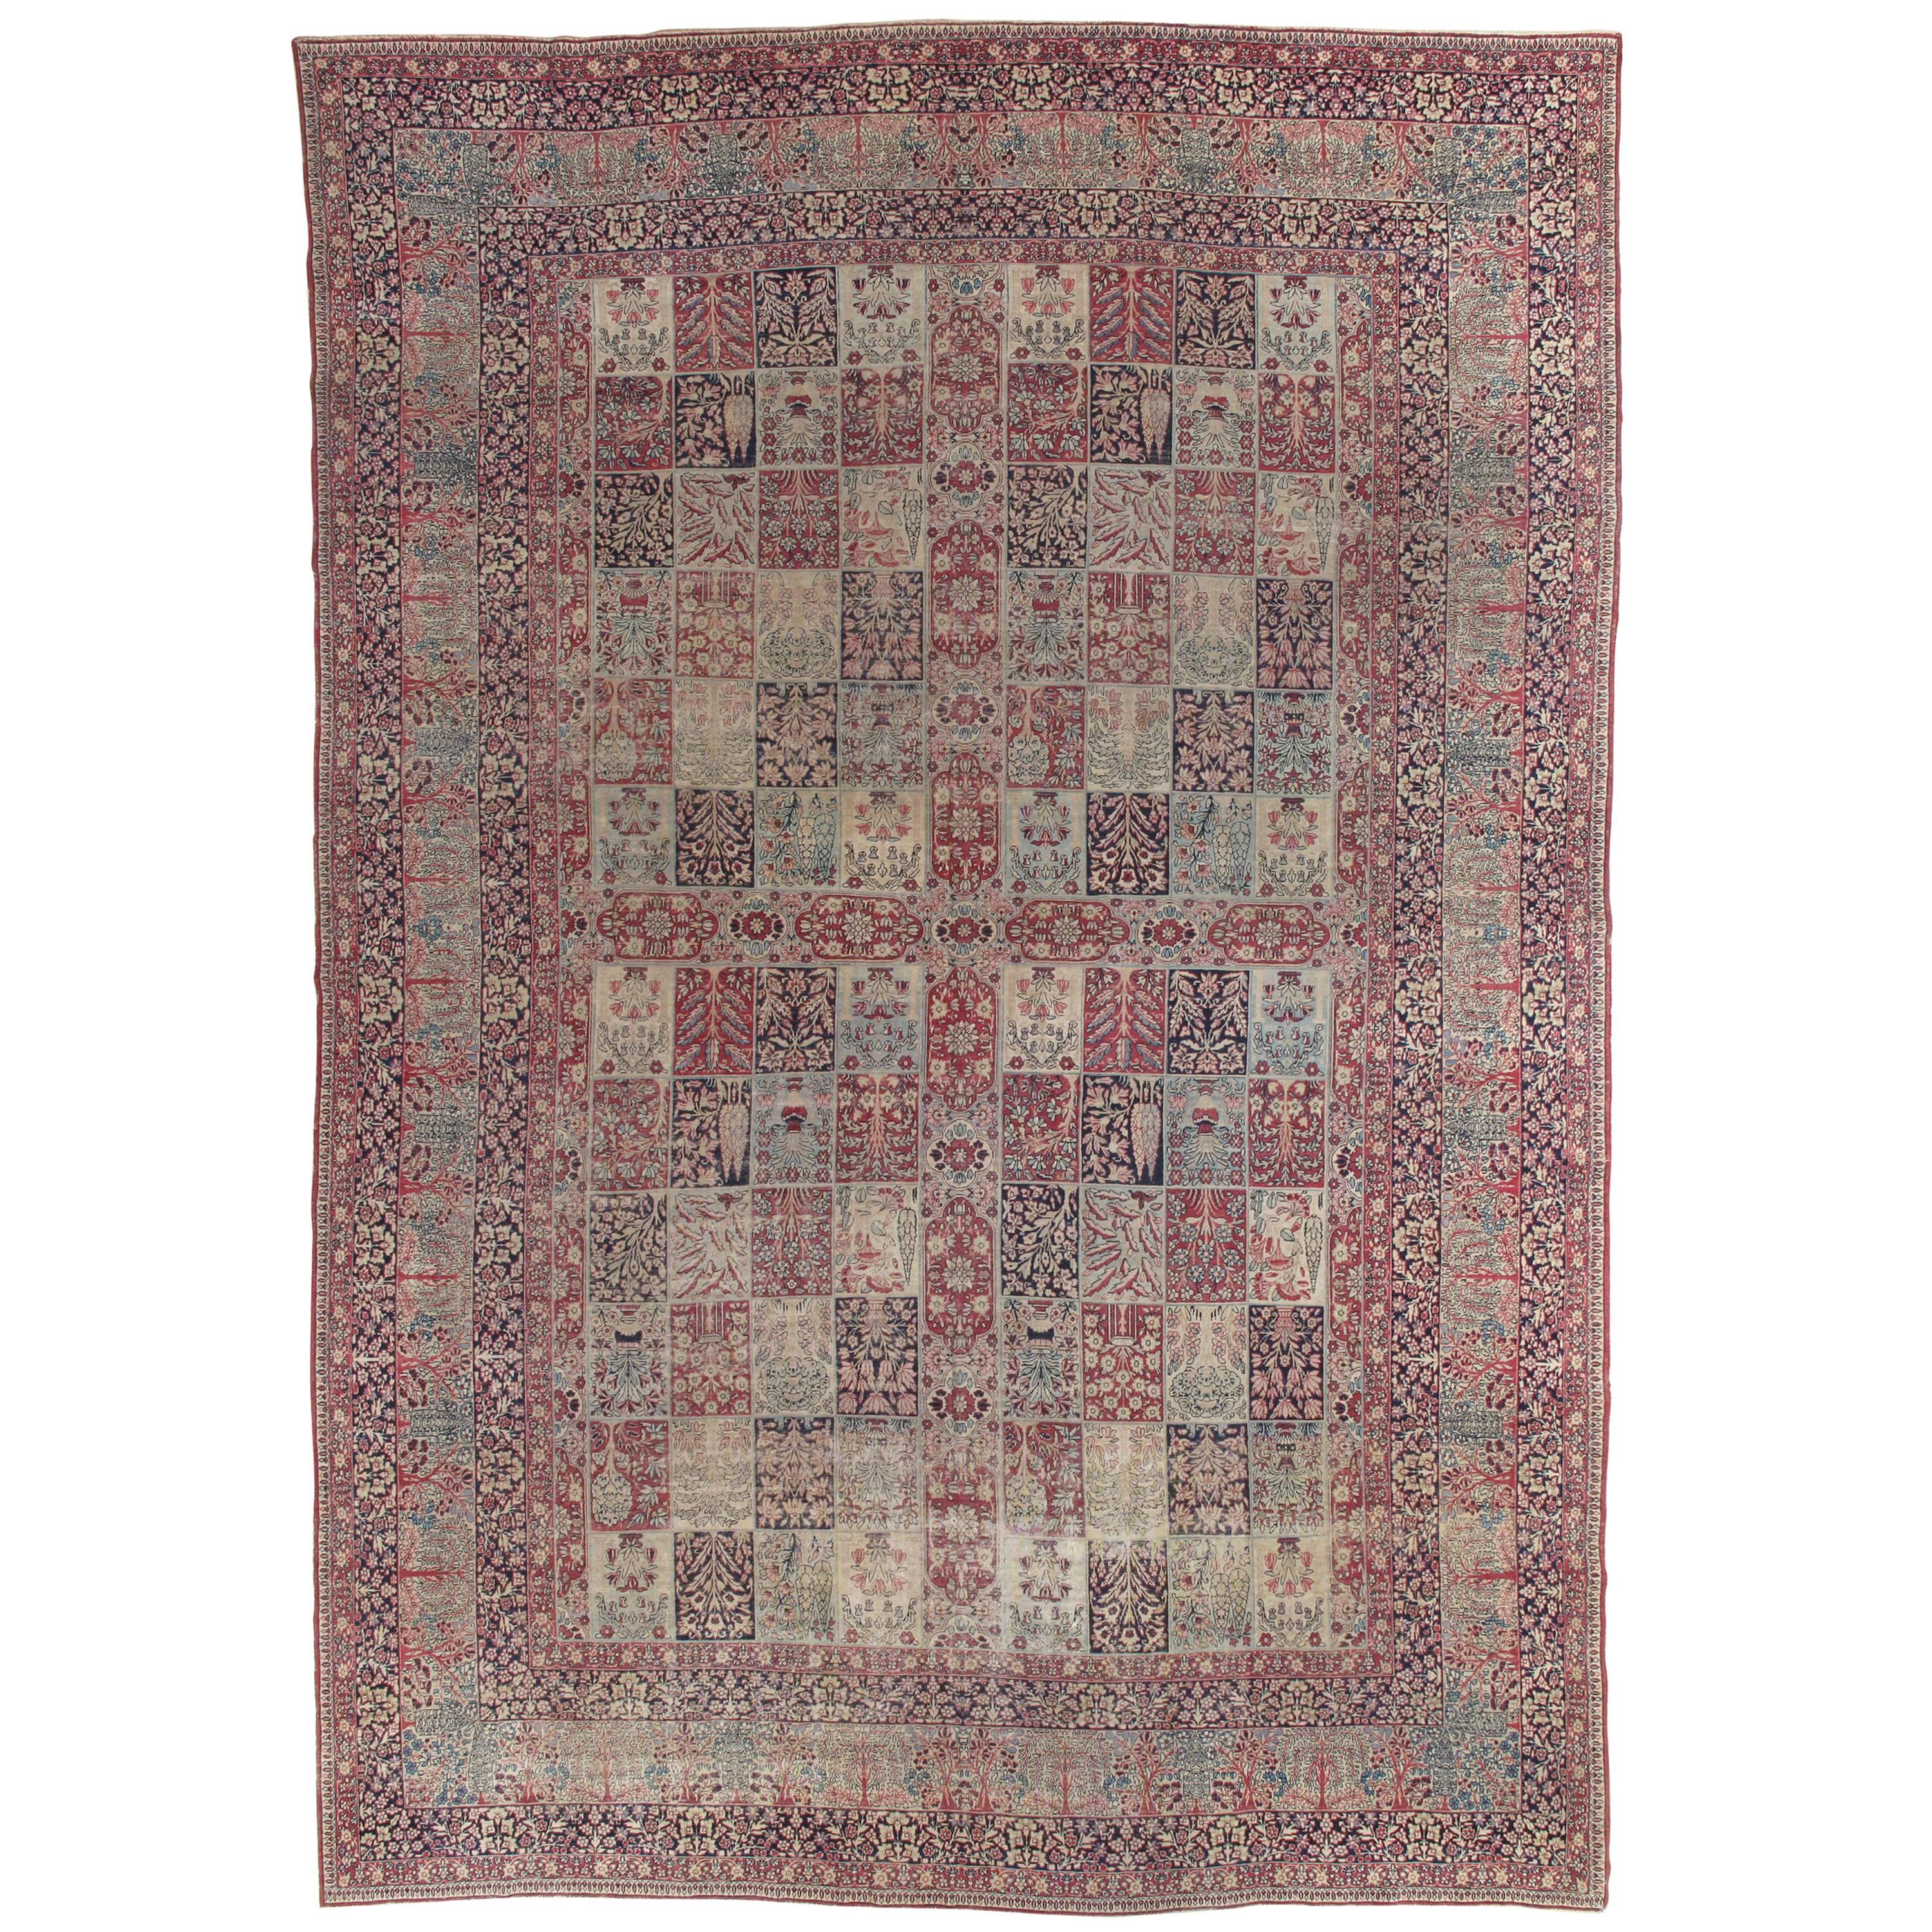 Antique Lavar Kerman Carpet, Handmade Wool Carpet, Multi-Color, Ivory, Red Wine